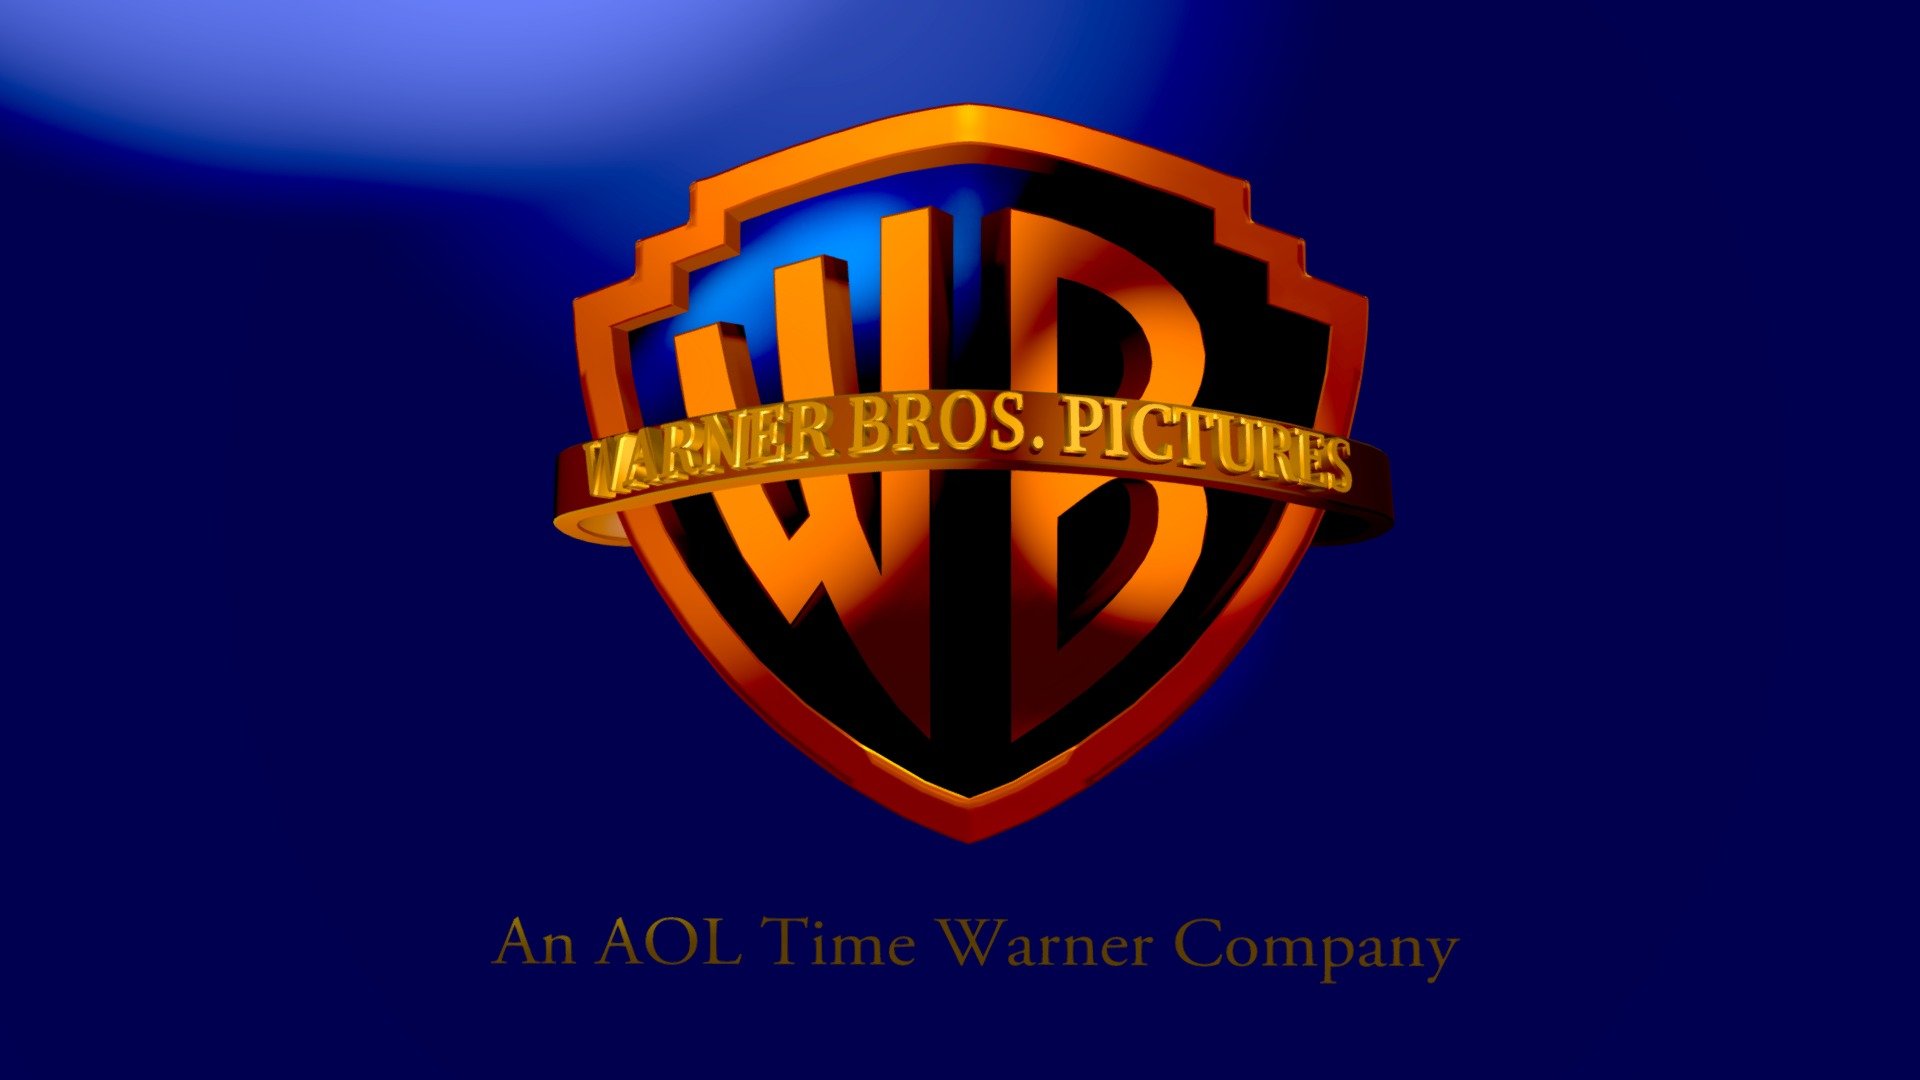 Warner Bros Pictures (2001-2003) Cinemascope - Download Free 3D model by  BlueTheTCFandFSPandTCSFan2022 Second Account (@kemari.deric) [2e8ca13]